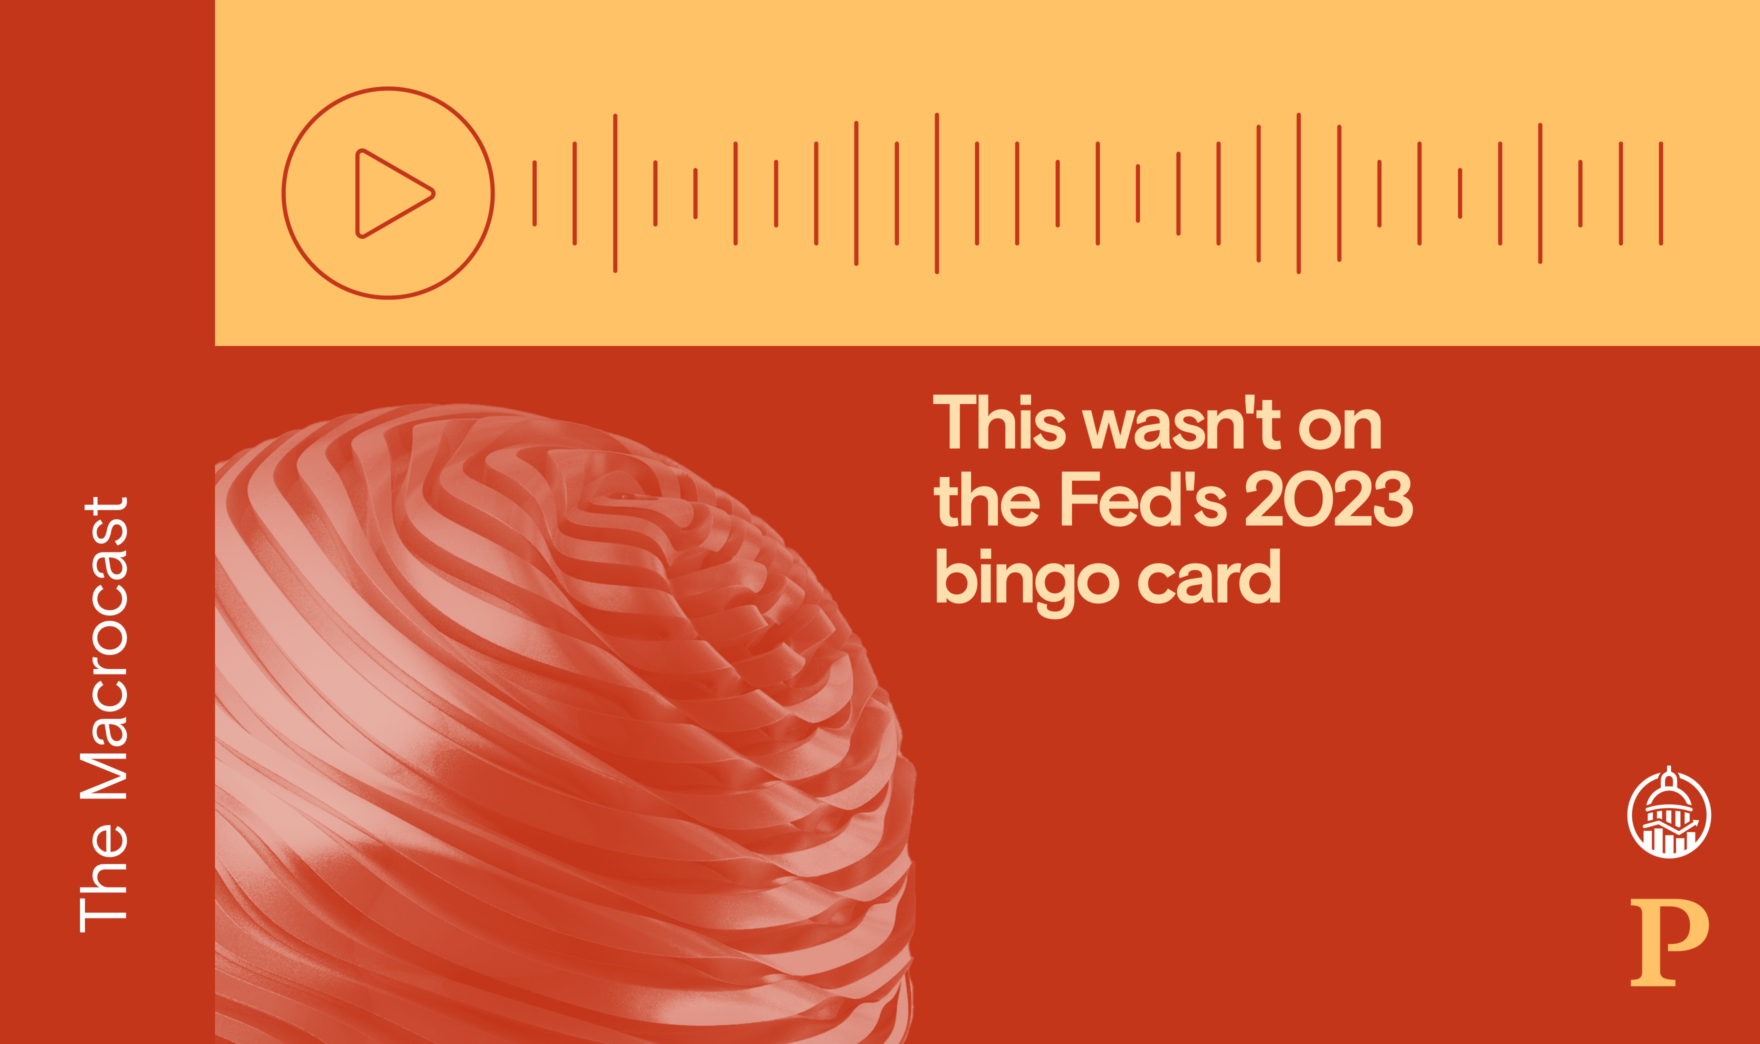 Macrocast: This wasn’t on the Fed’s 2023 bingo card